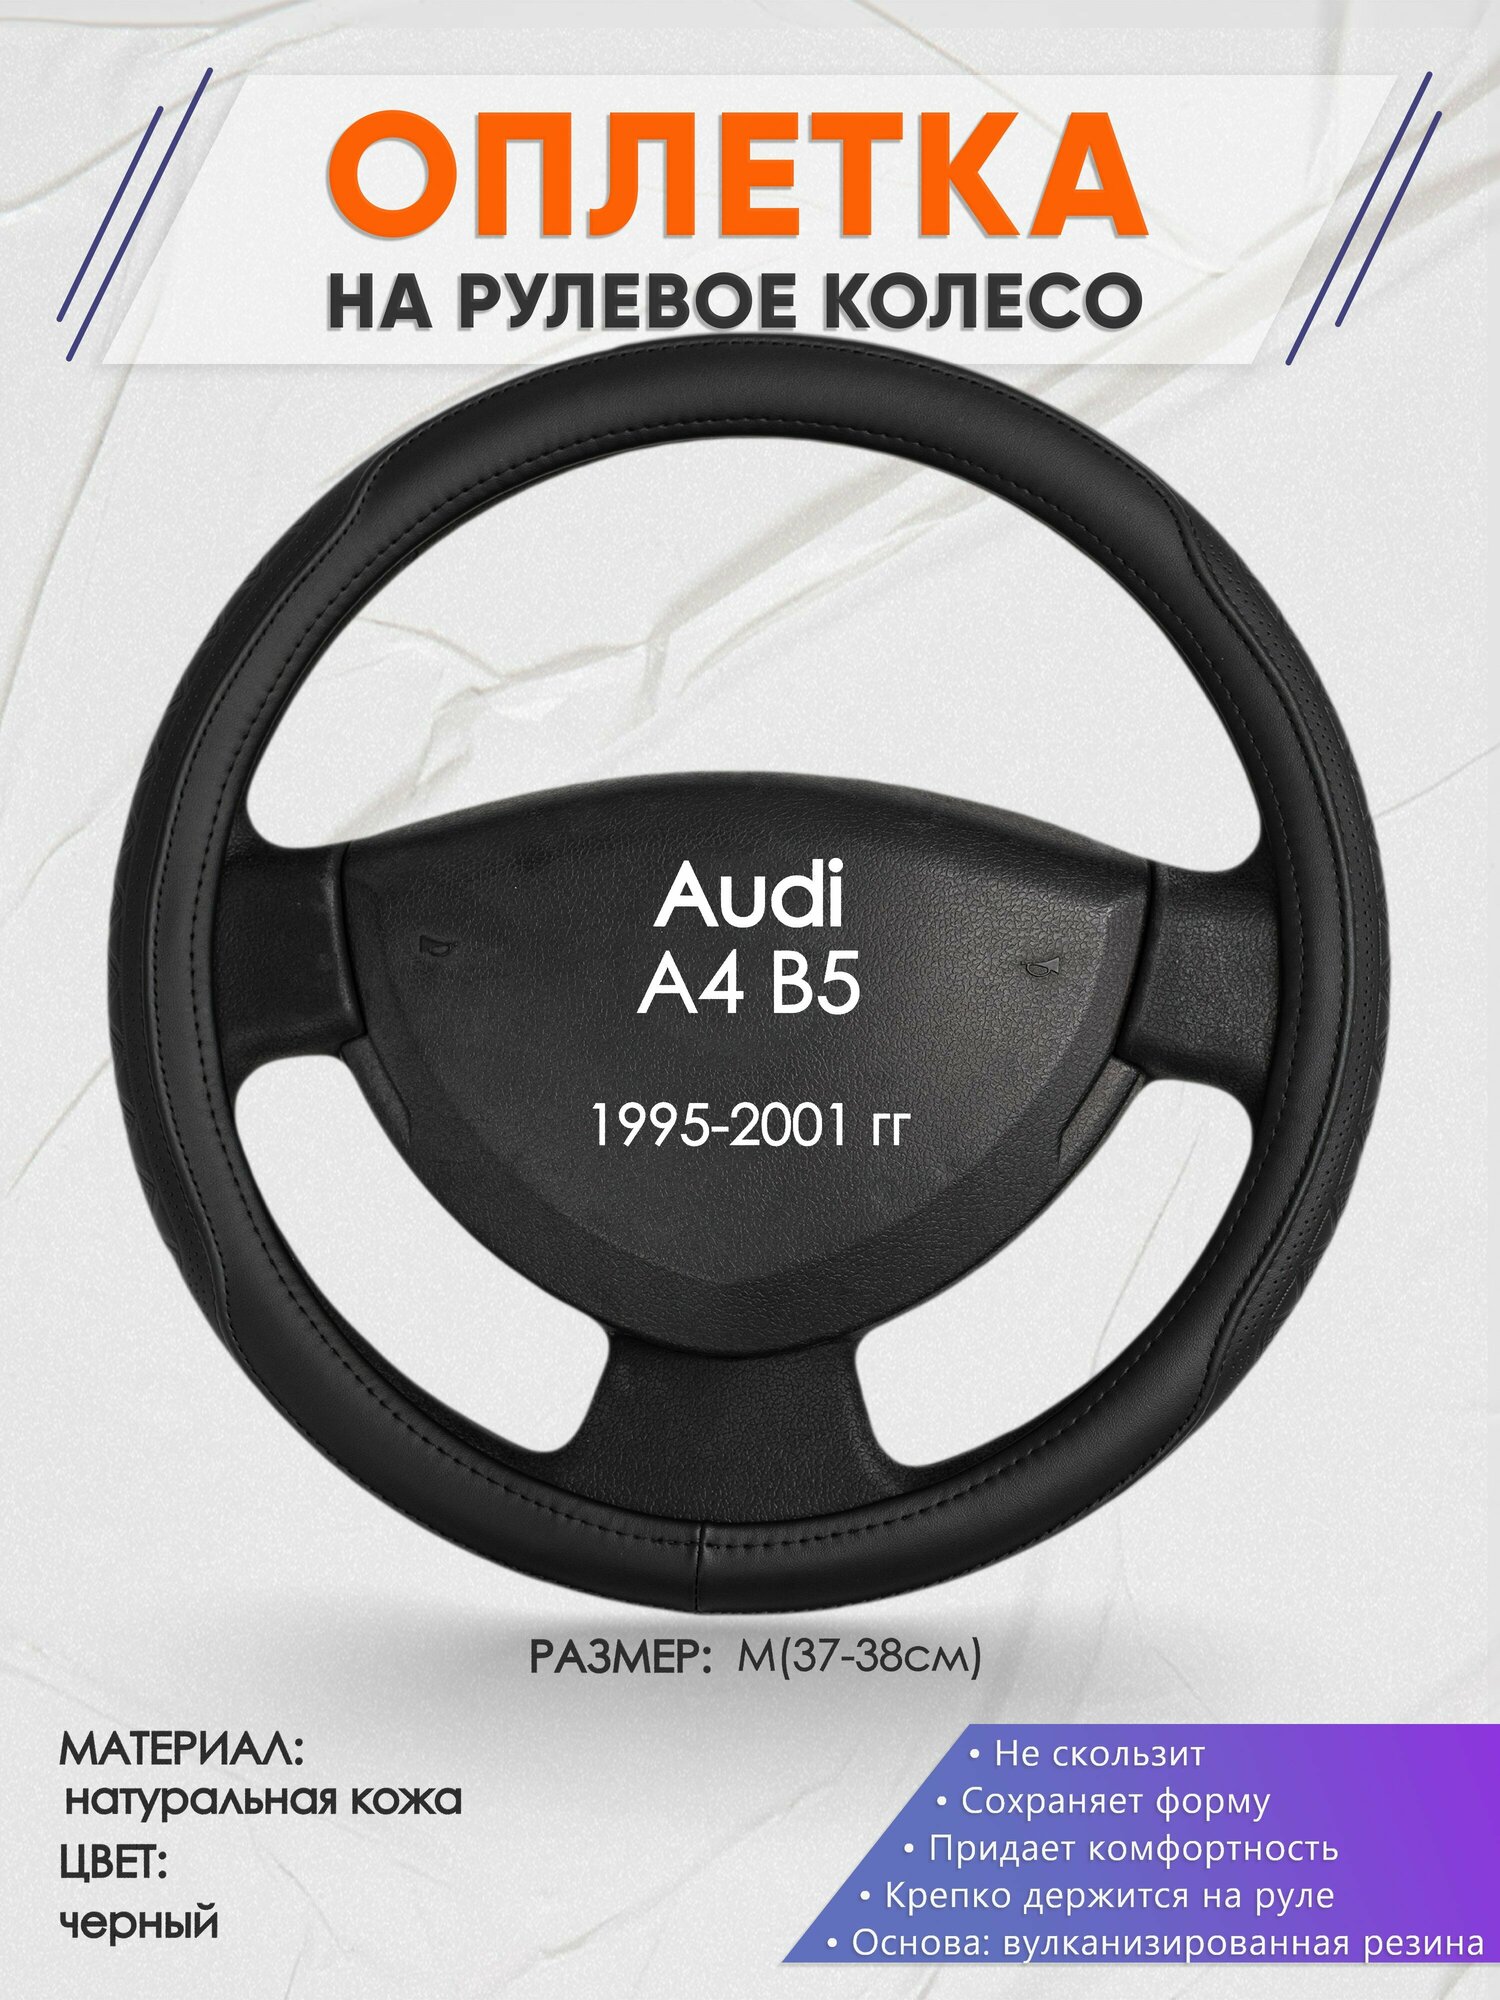 Оплетка на руль для Audi A4 B5(Ауди А4 б5) 1995-2001 M(37-38см) Натуральная кожа 28